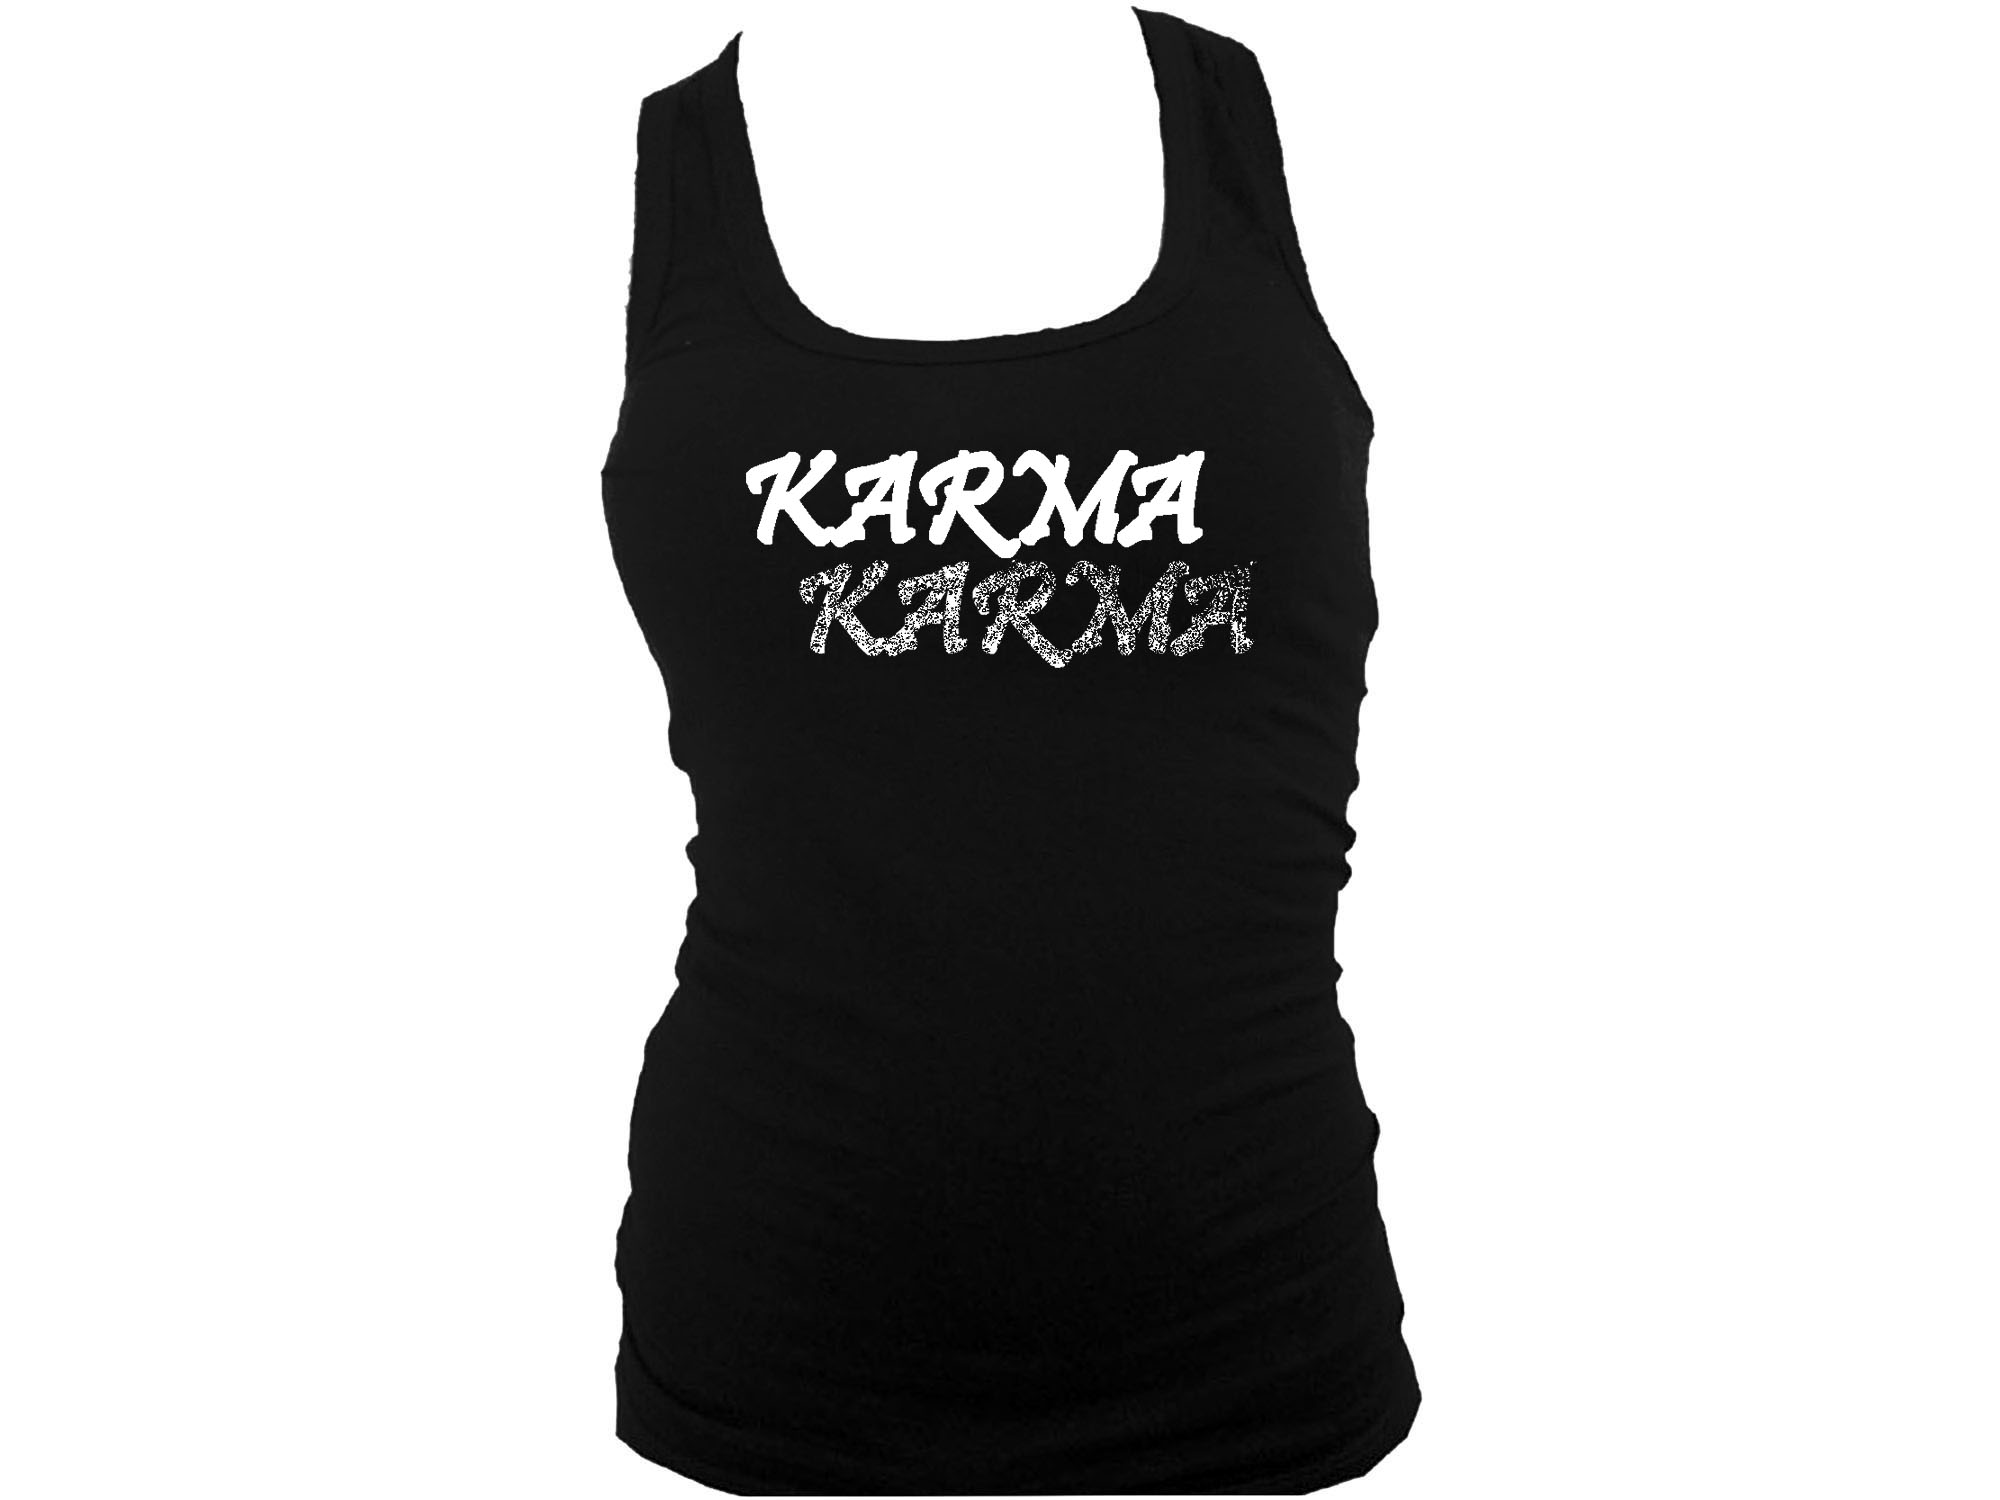 Karma yoga wear women black tank top S/M